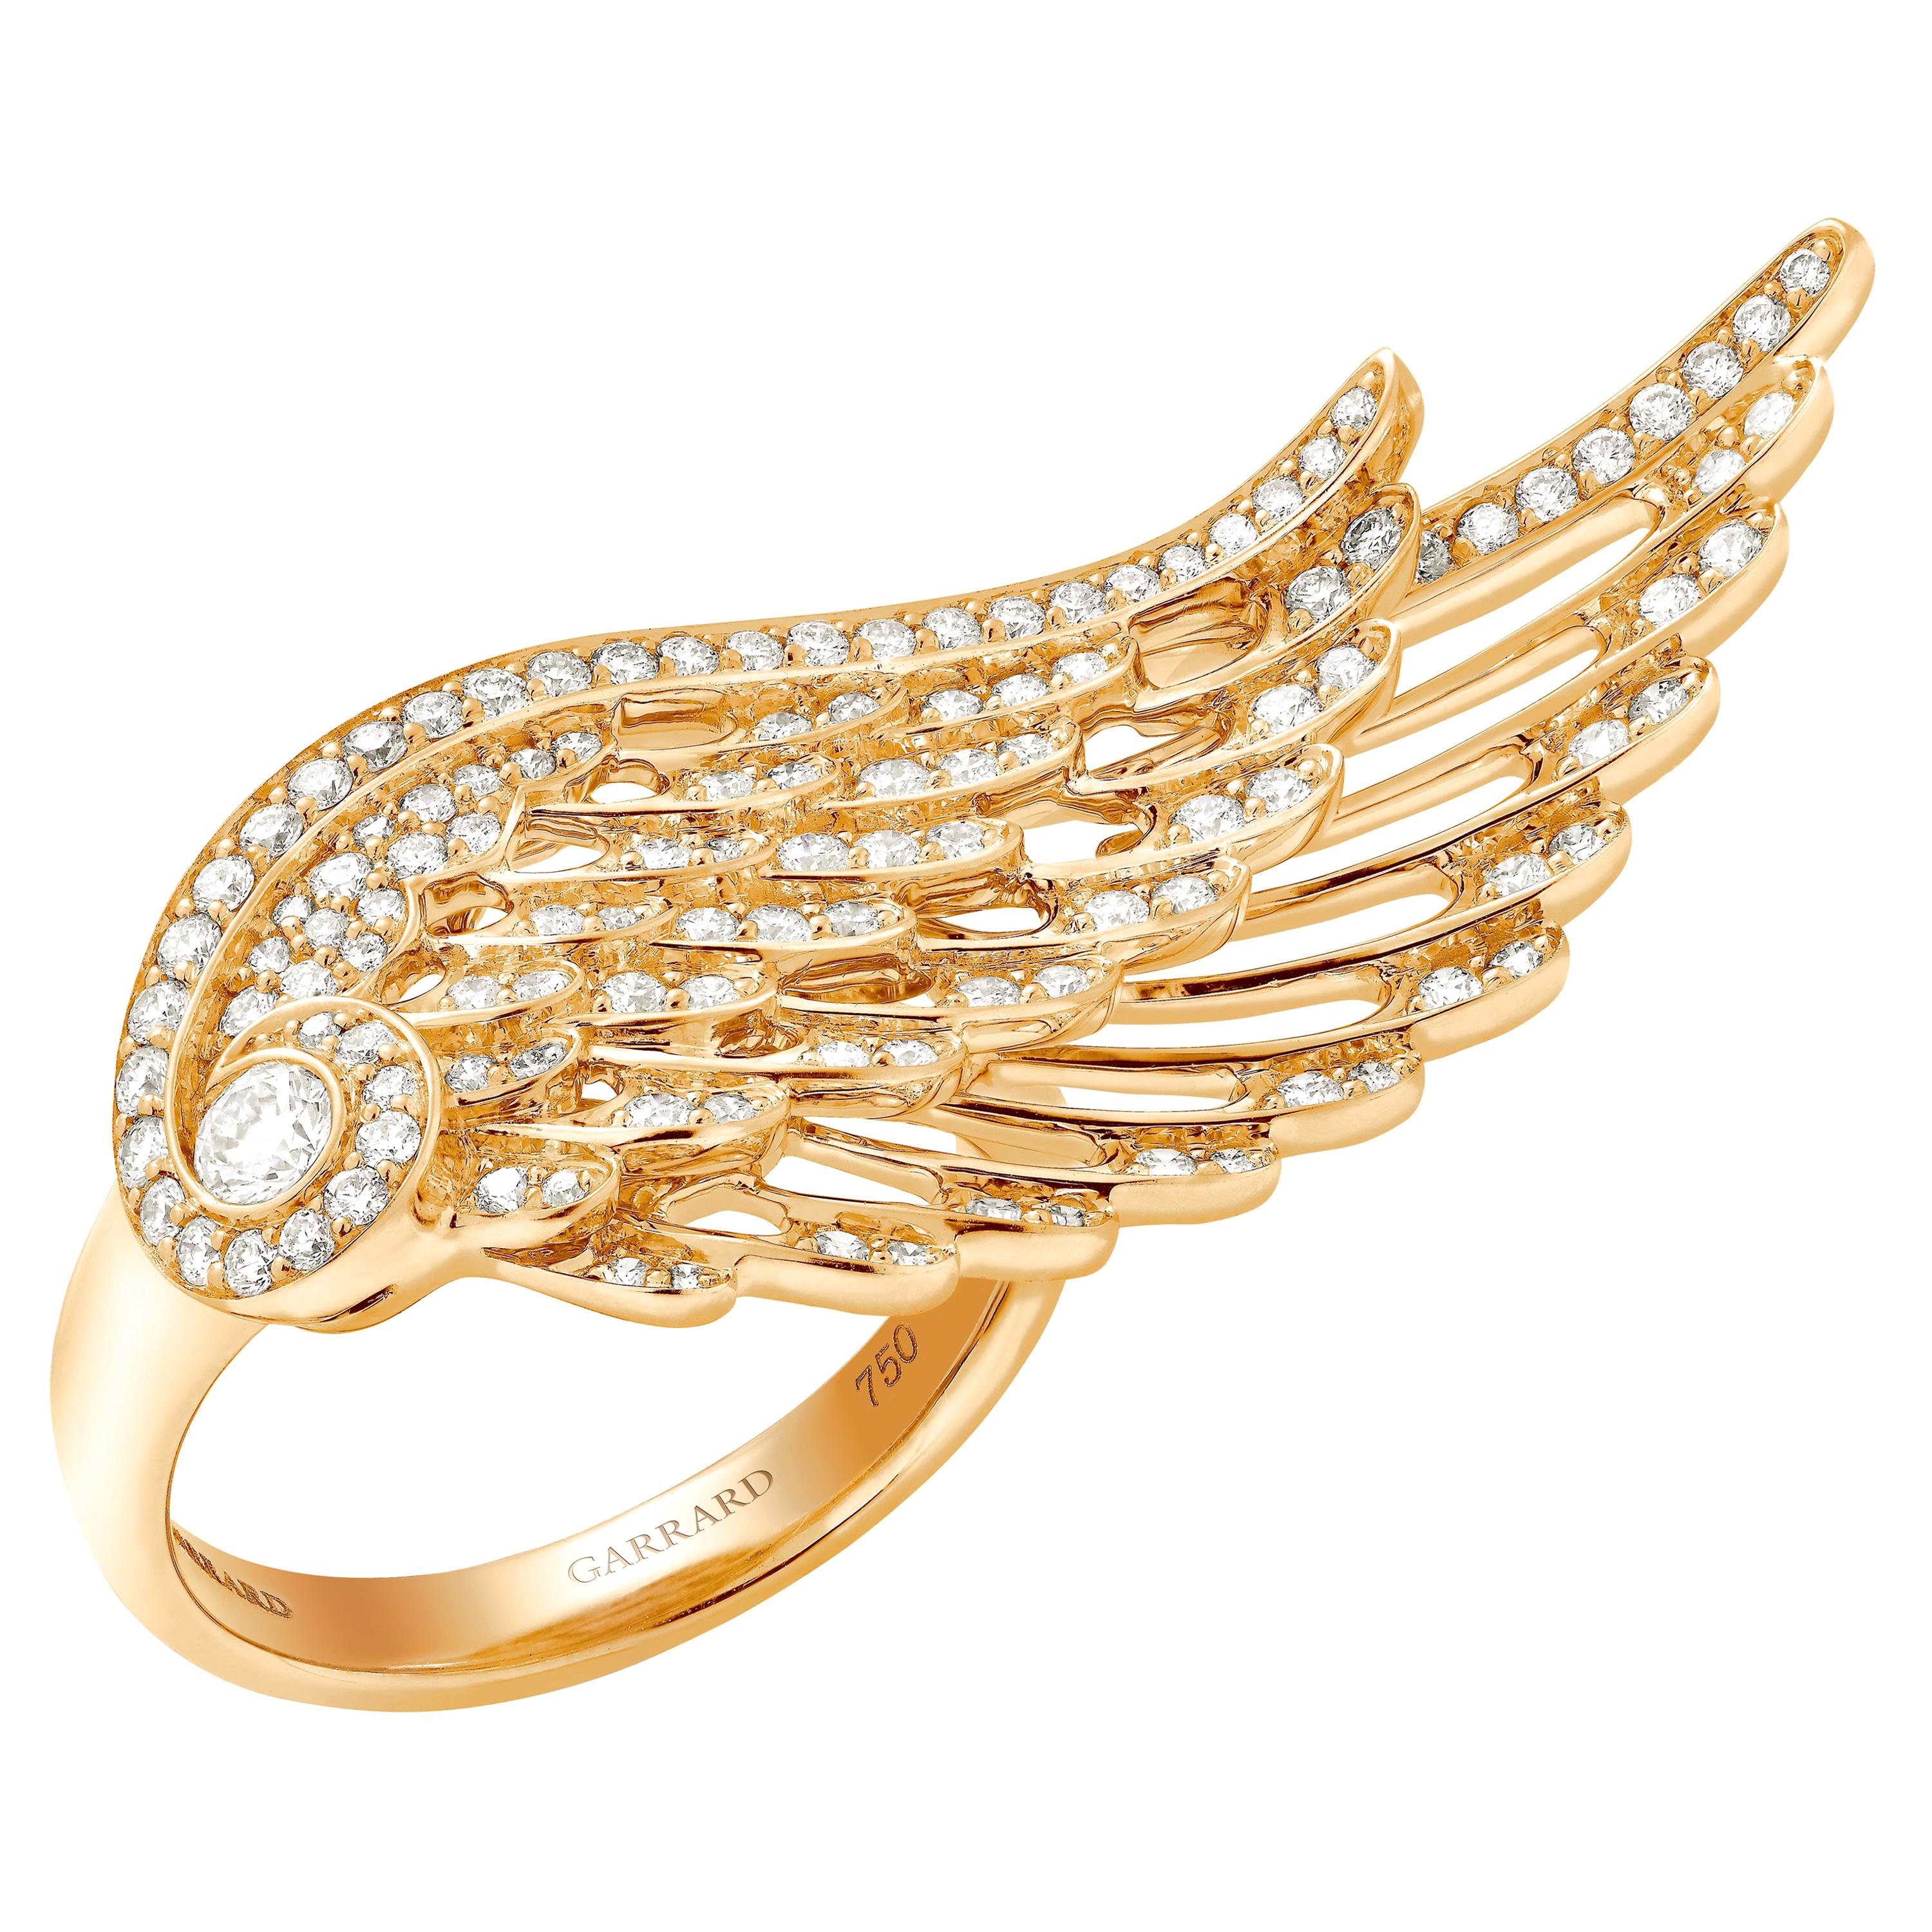 Garrard 'Wings Embrace' 18 Karat Yellow Gold Round White Diamond Ring For Sale